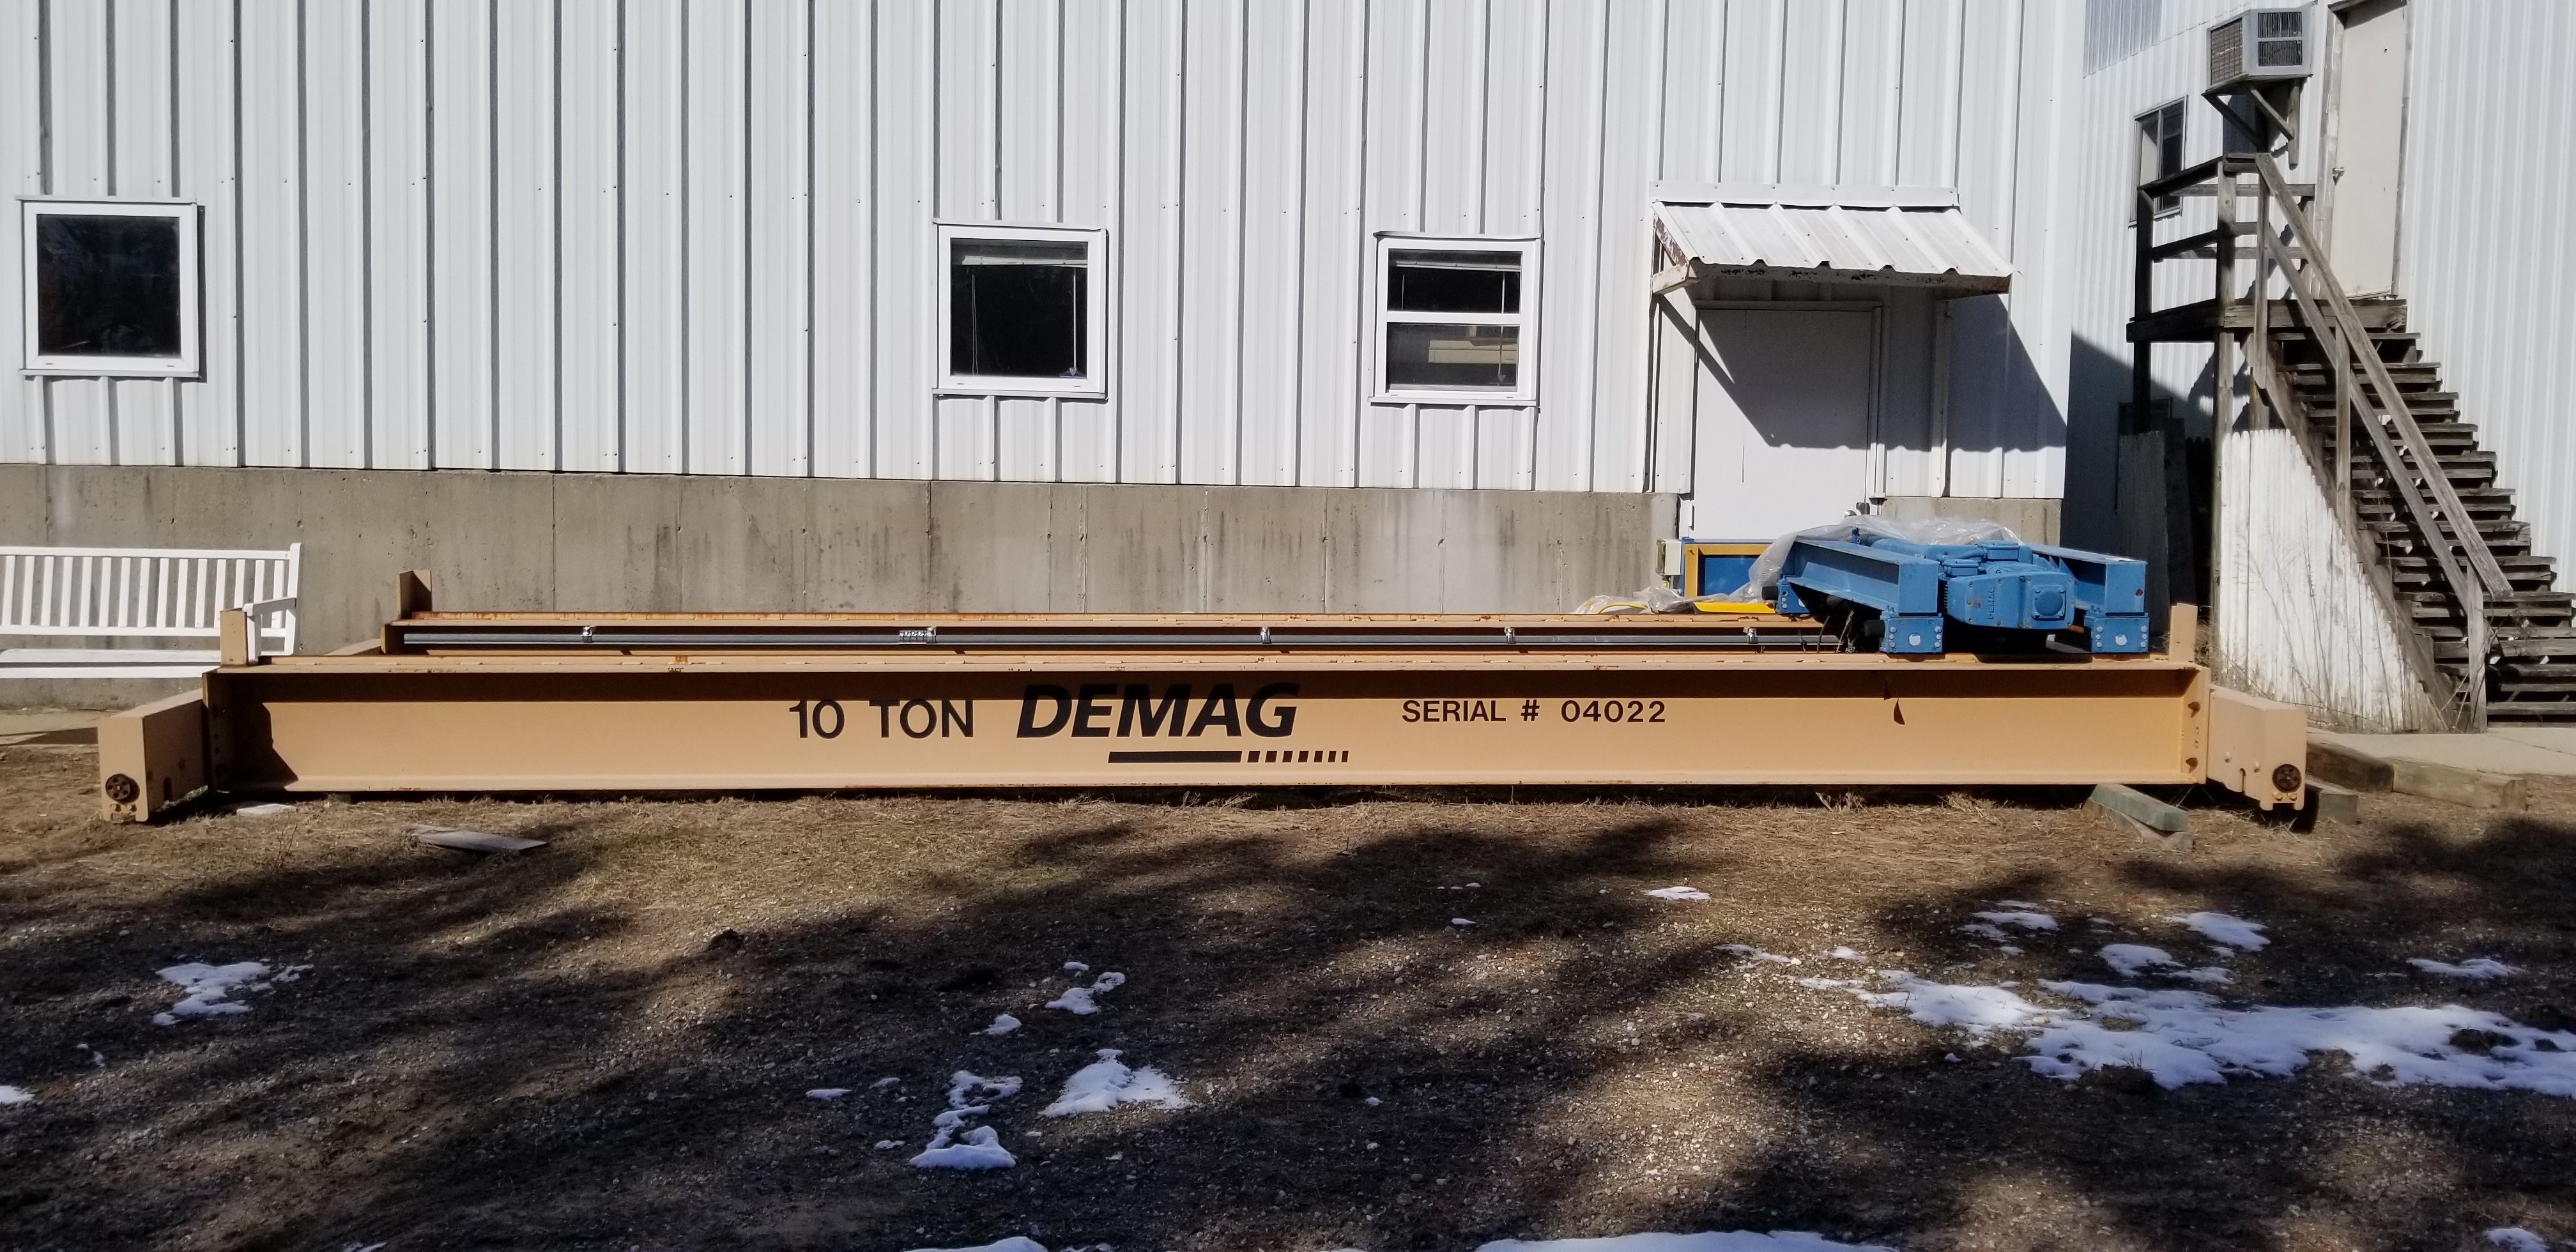 10 Ton Capacity Demag Overhead Bridge Crane For Sale 10tDemagOHBCraneFS